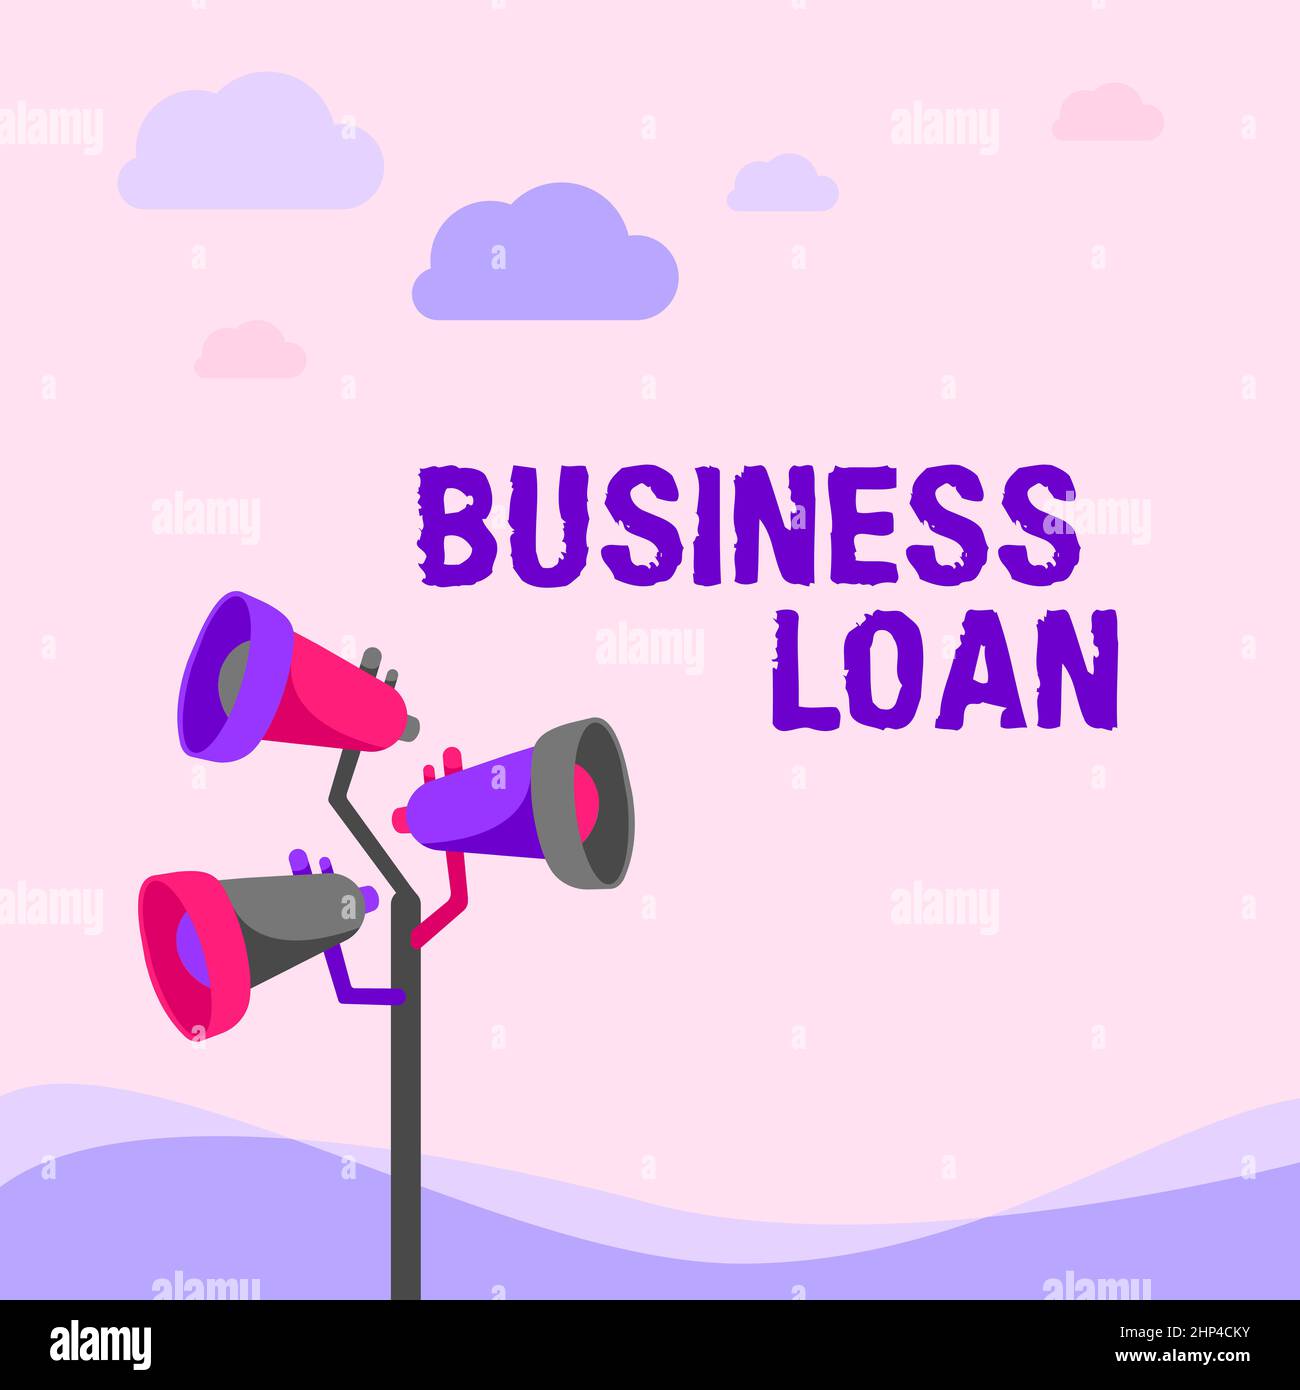 Text sign showing Business Loan, Conceptual photo Credit Mortgage Financial Assistance Cash Advances Debt Pole Megaphones Drawing Making Announcement Stock Photo